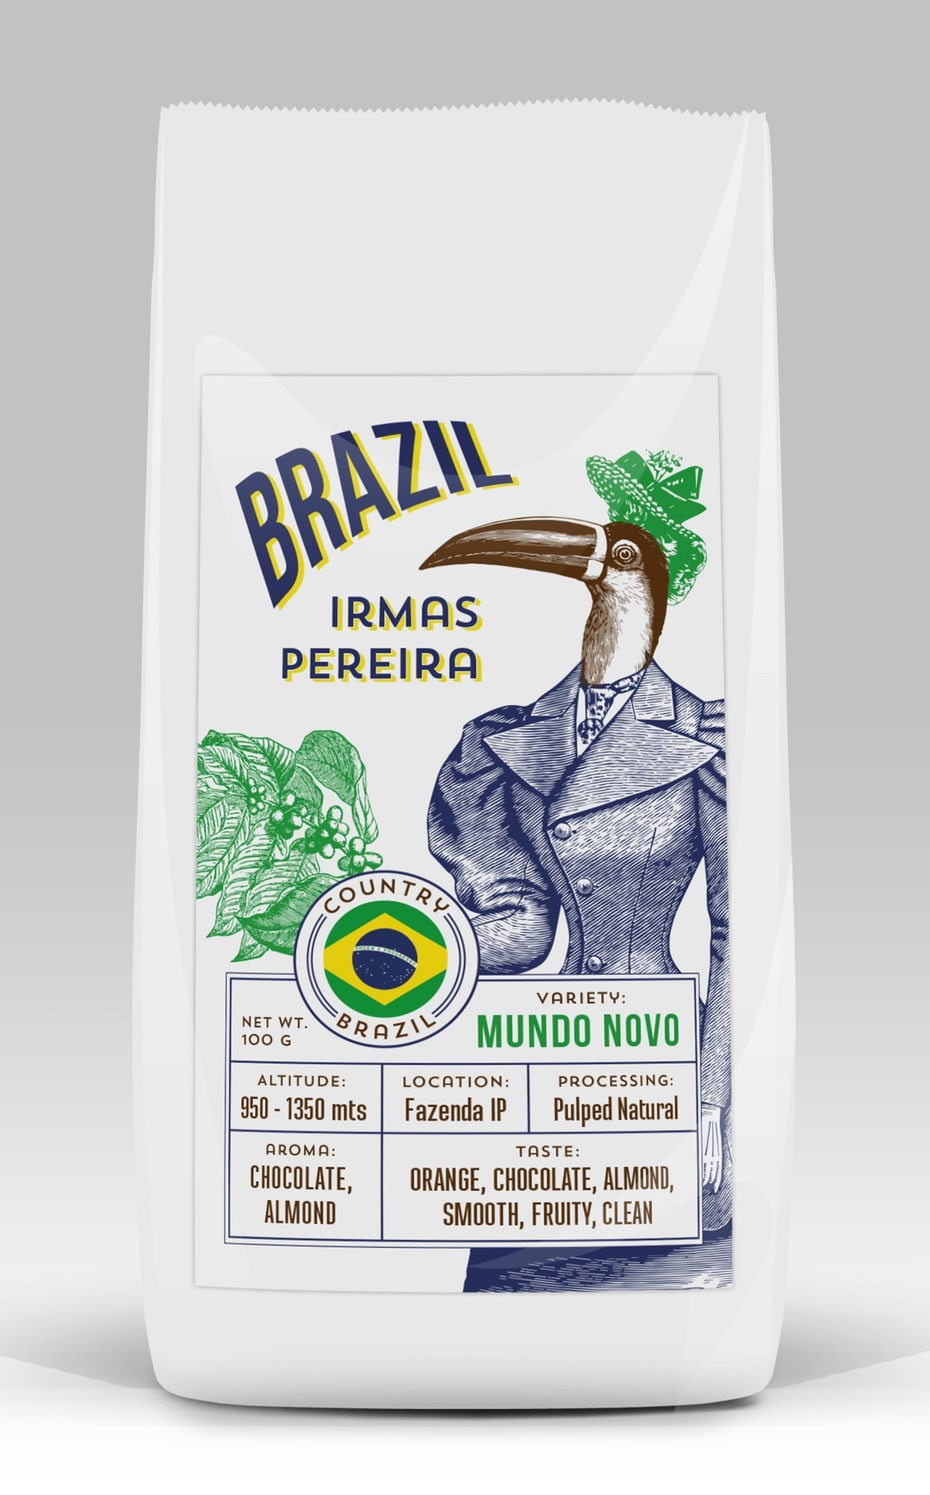 Packaging design trends 2020 example: Metamorphoses Brazilian coffee label